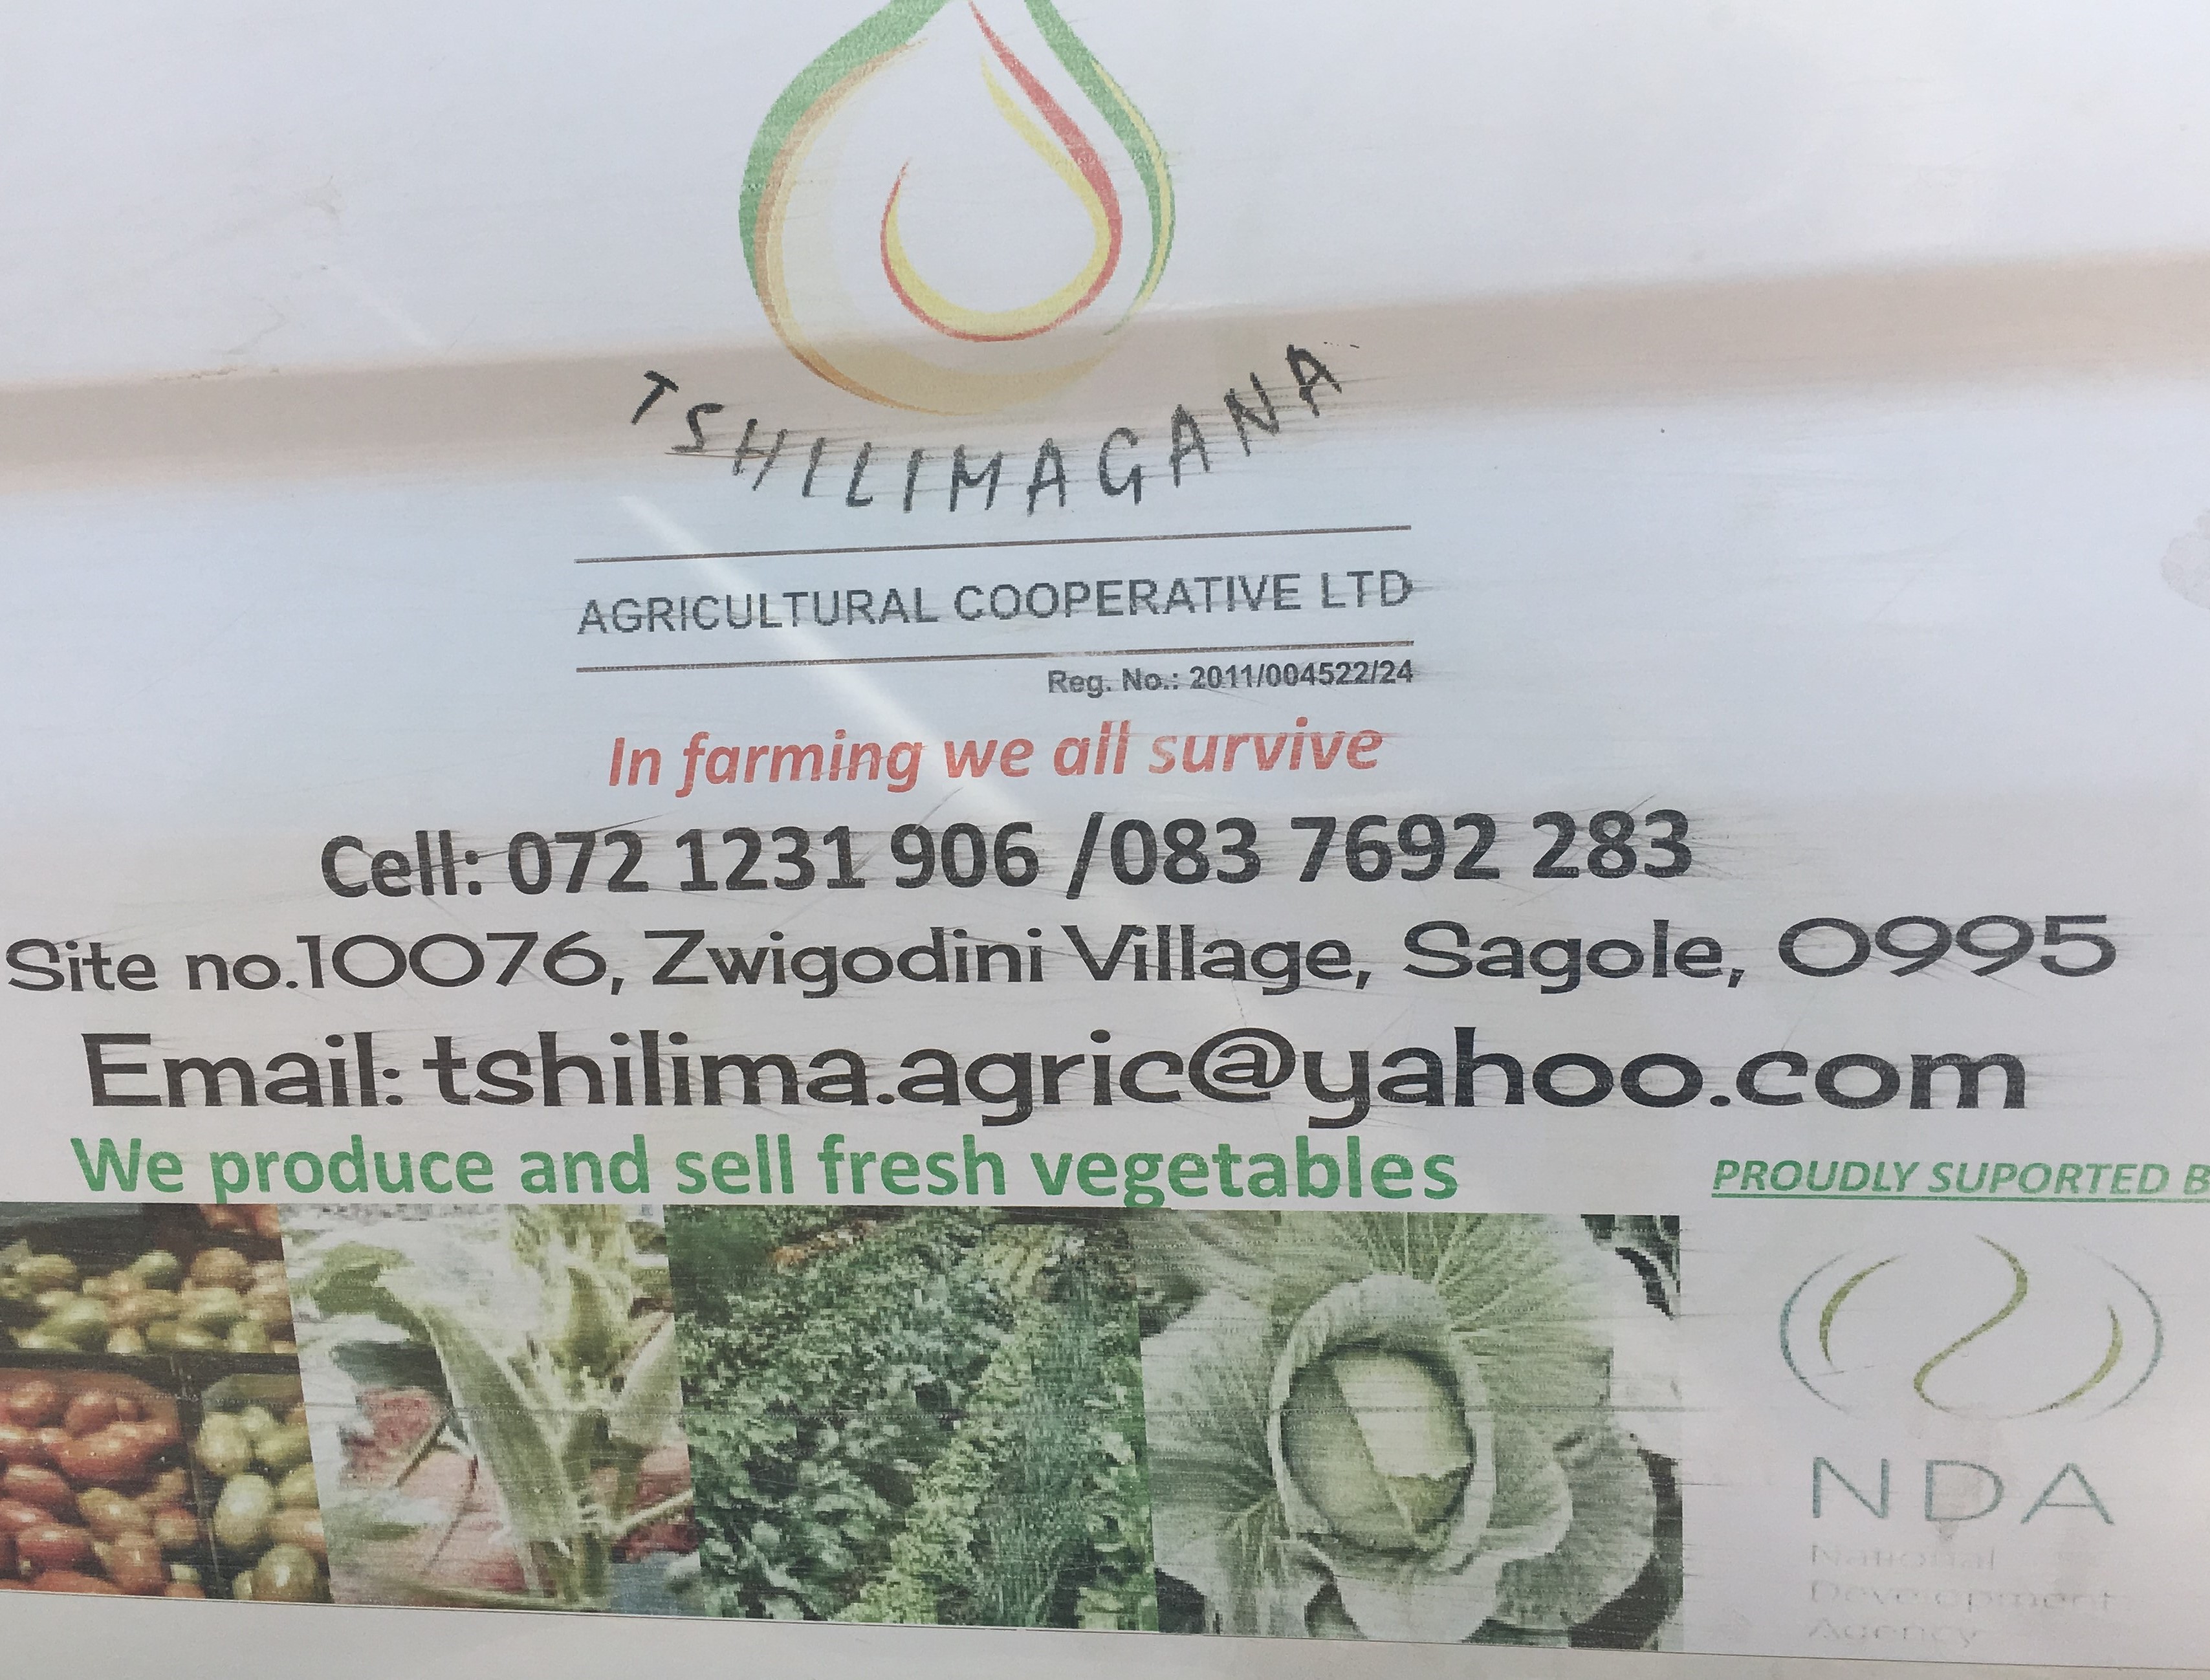 Tshilimangana Agricultural Cooperative